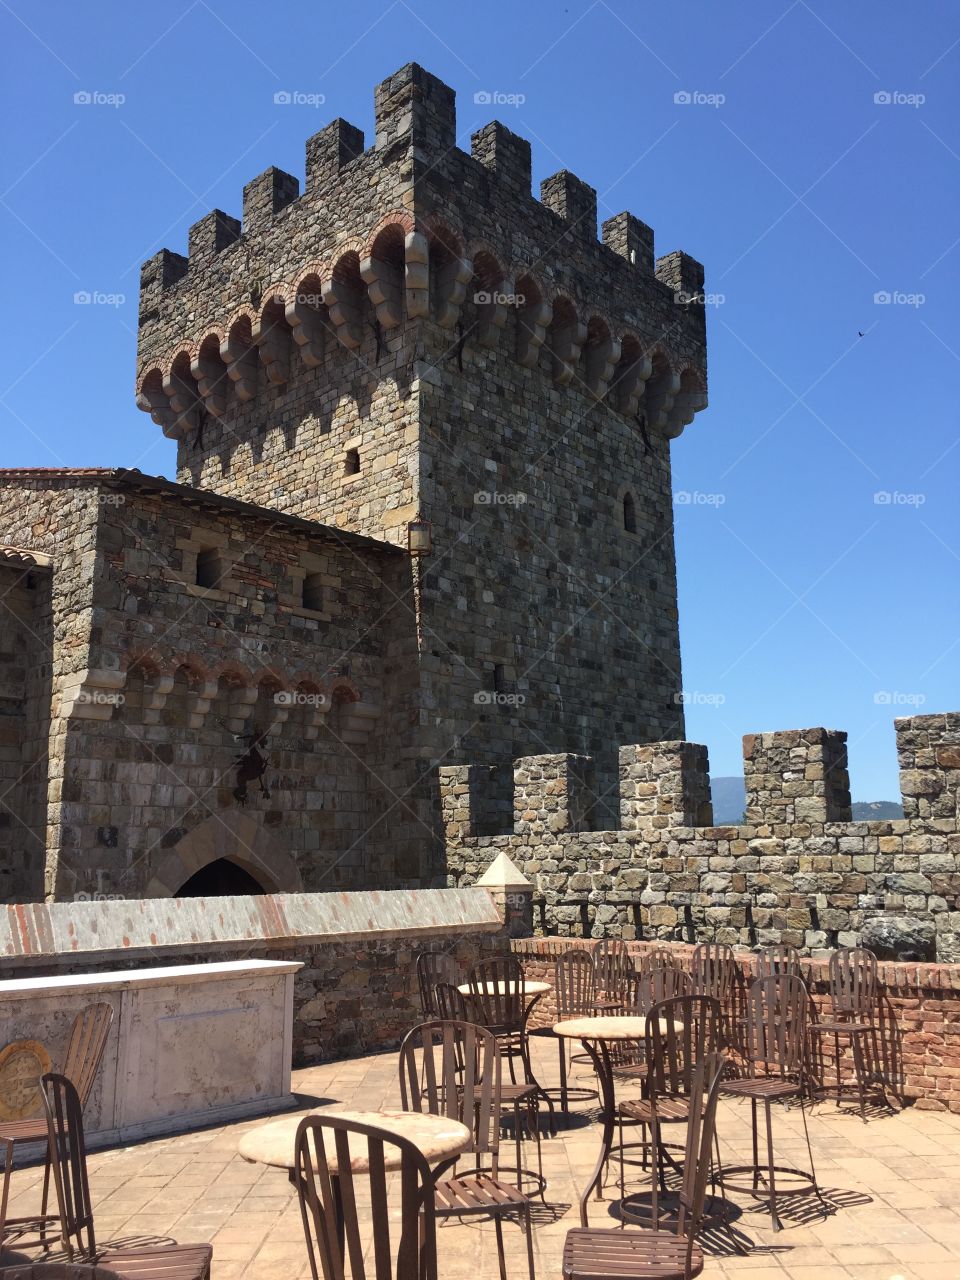 Castillo, Winery, Fortress, Trip, Napa Valley, Wine Tour, Vino, St Helena, Northern California, CA, Beauty, Stone Walls, Tower